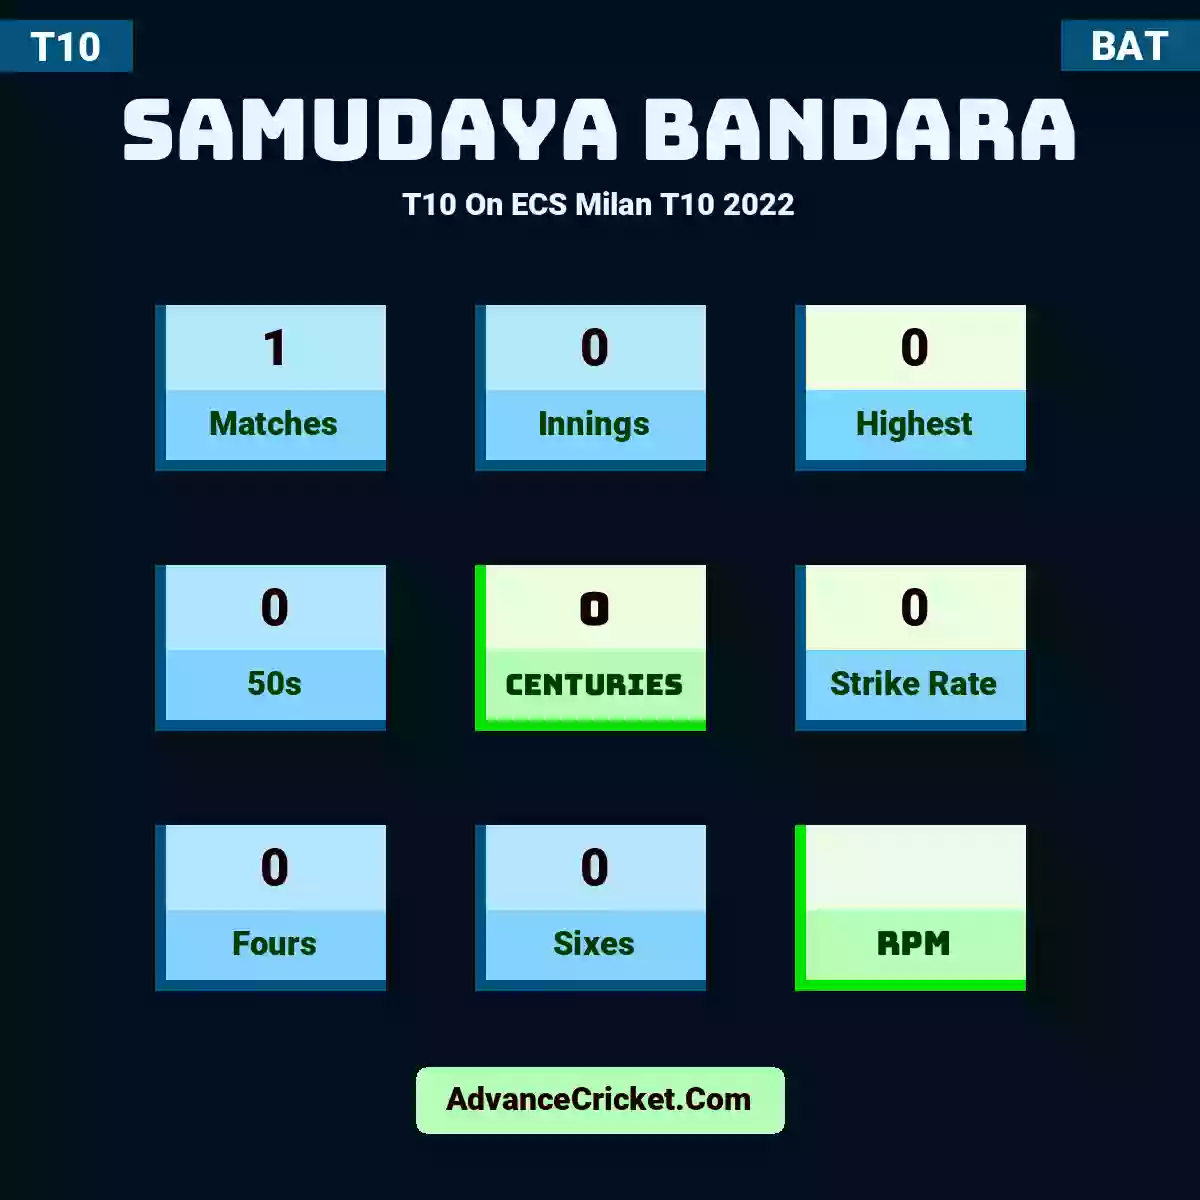 Samudaya Bandara T10  On ECS Milan T10 2022, Samudaya Bandara played 1 matches, scored 0 runs as highest, 0 half-centuries, and 0 centuries, with a strike rate of 0. S.Bandara hit 0 fours and 0 sixes.